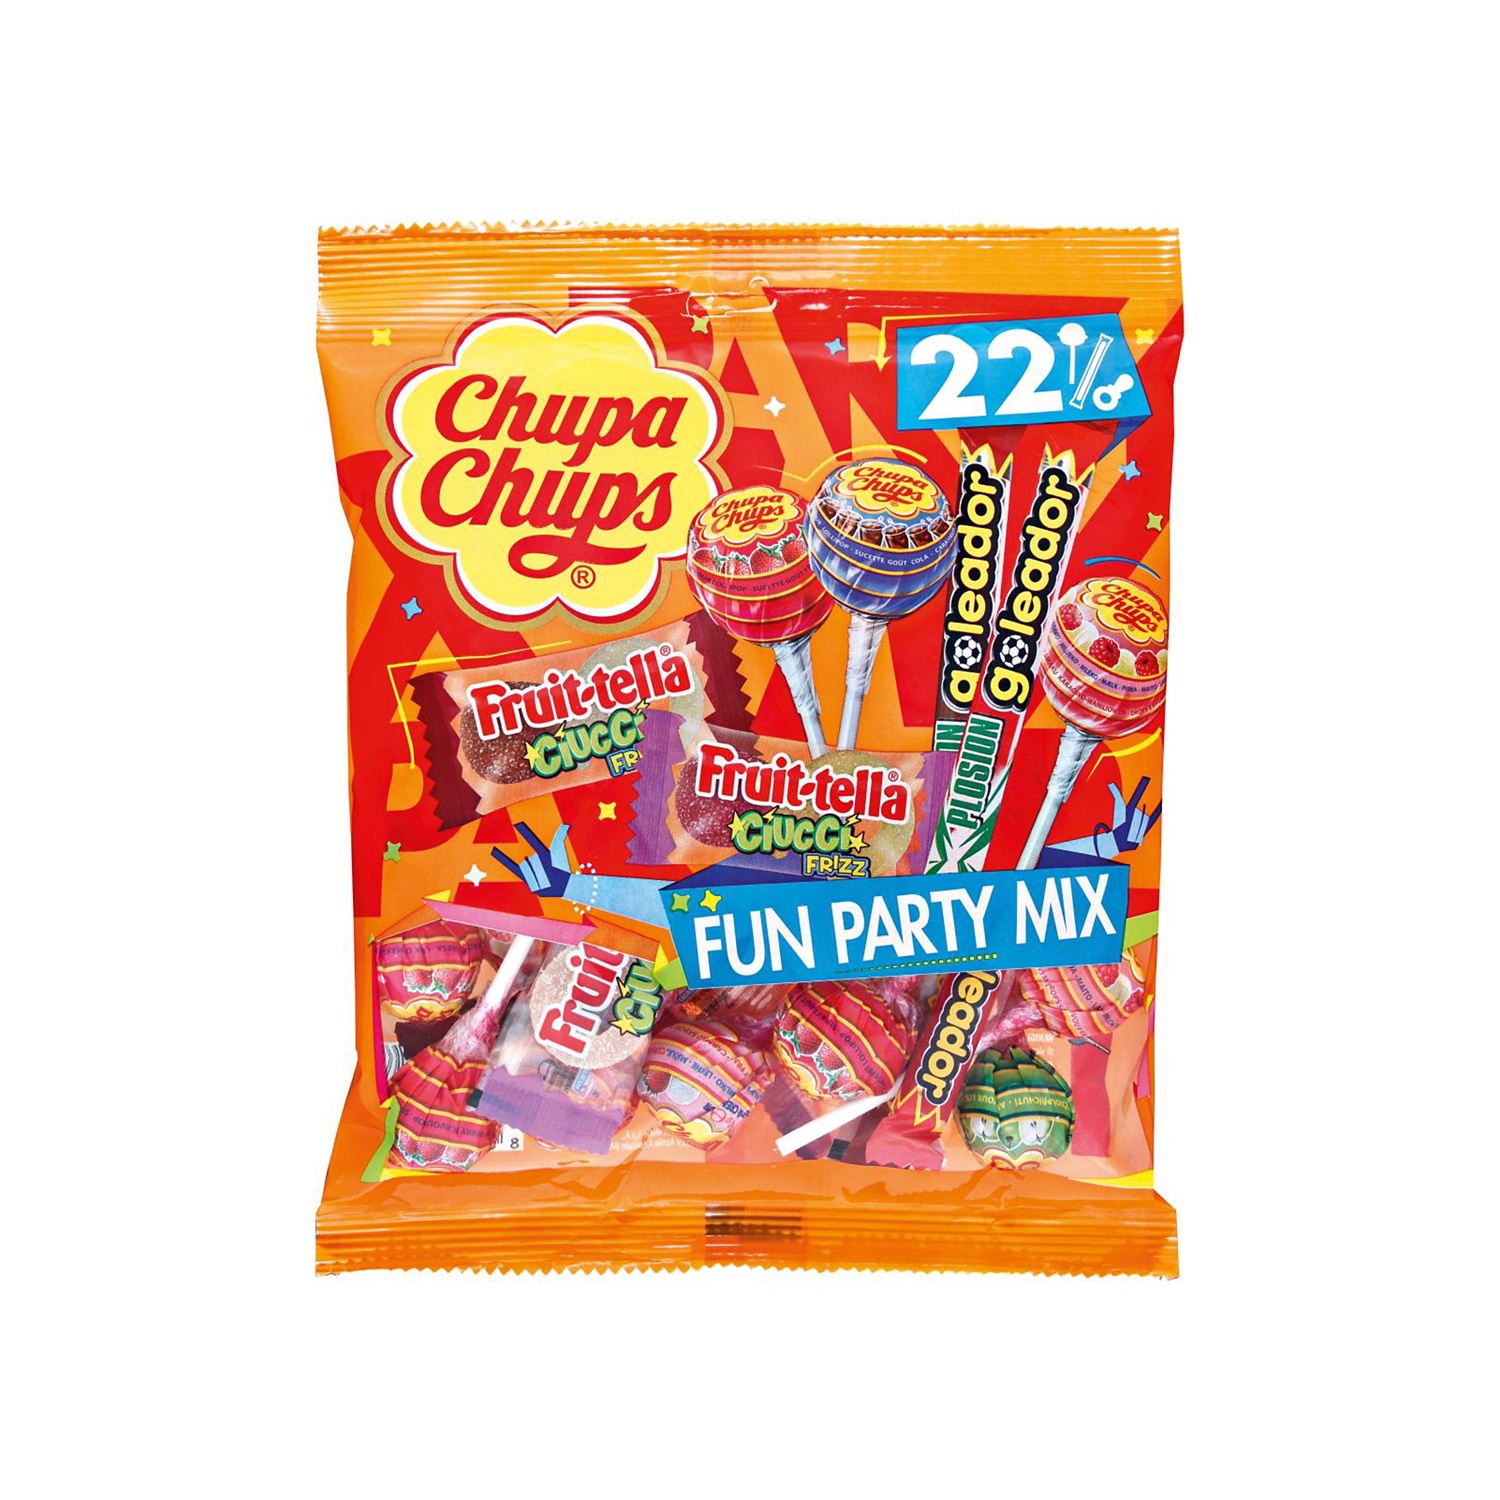 CHUPA CHUPS Fun Party mix